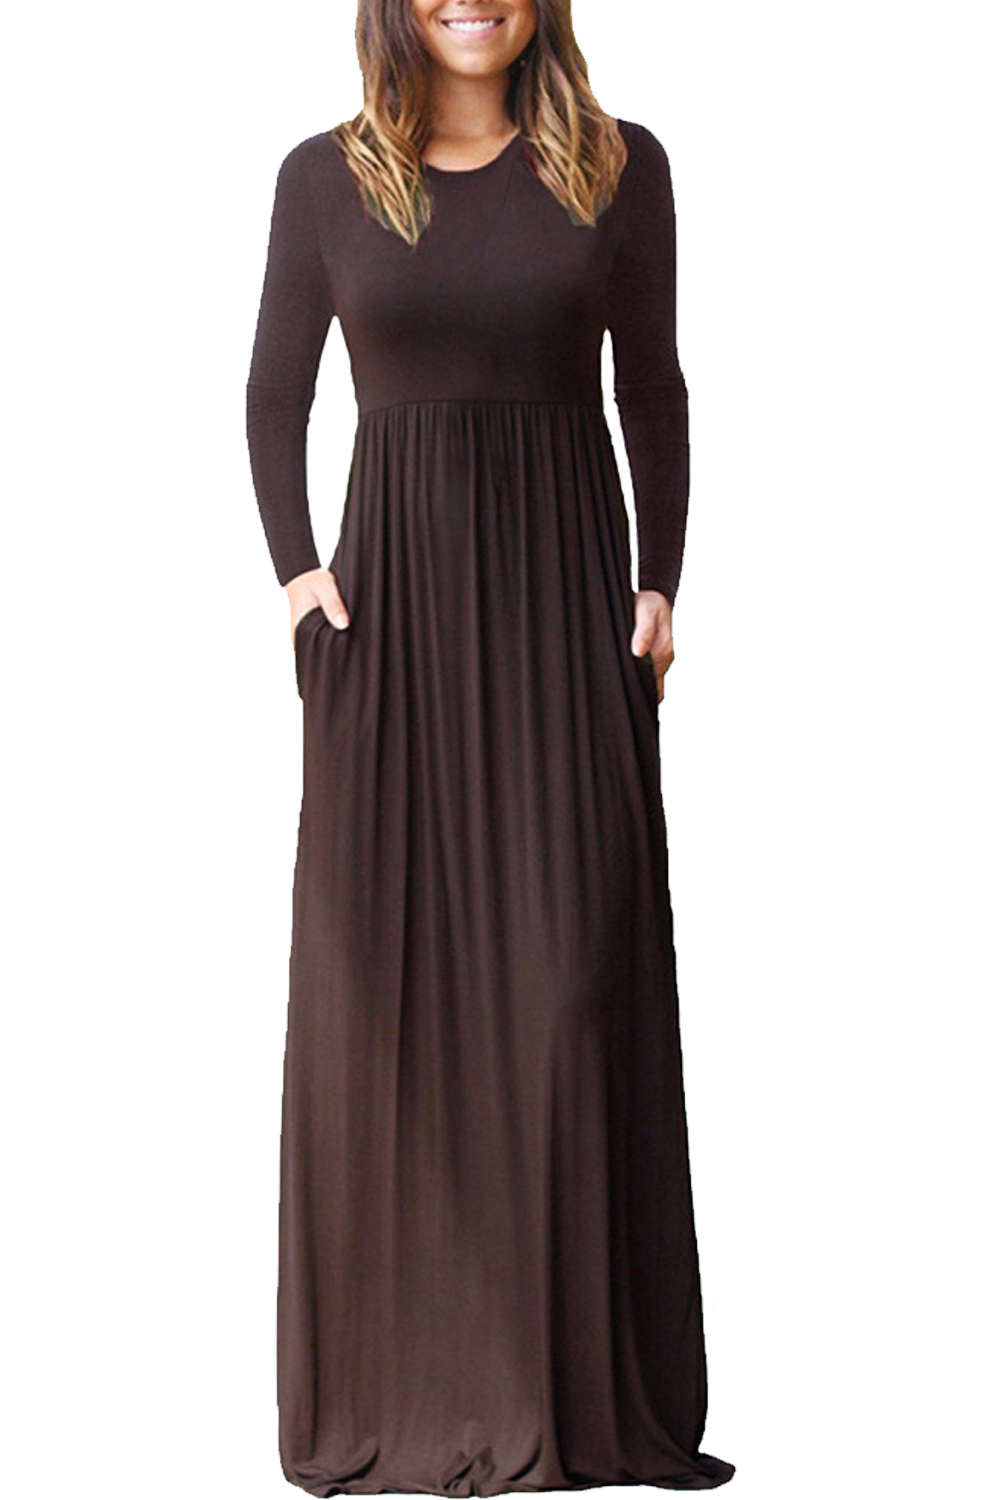 Iyasson Long Sleeve Maxi Dress with Pockets